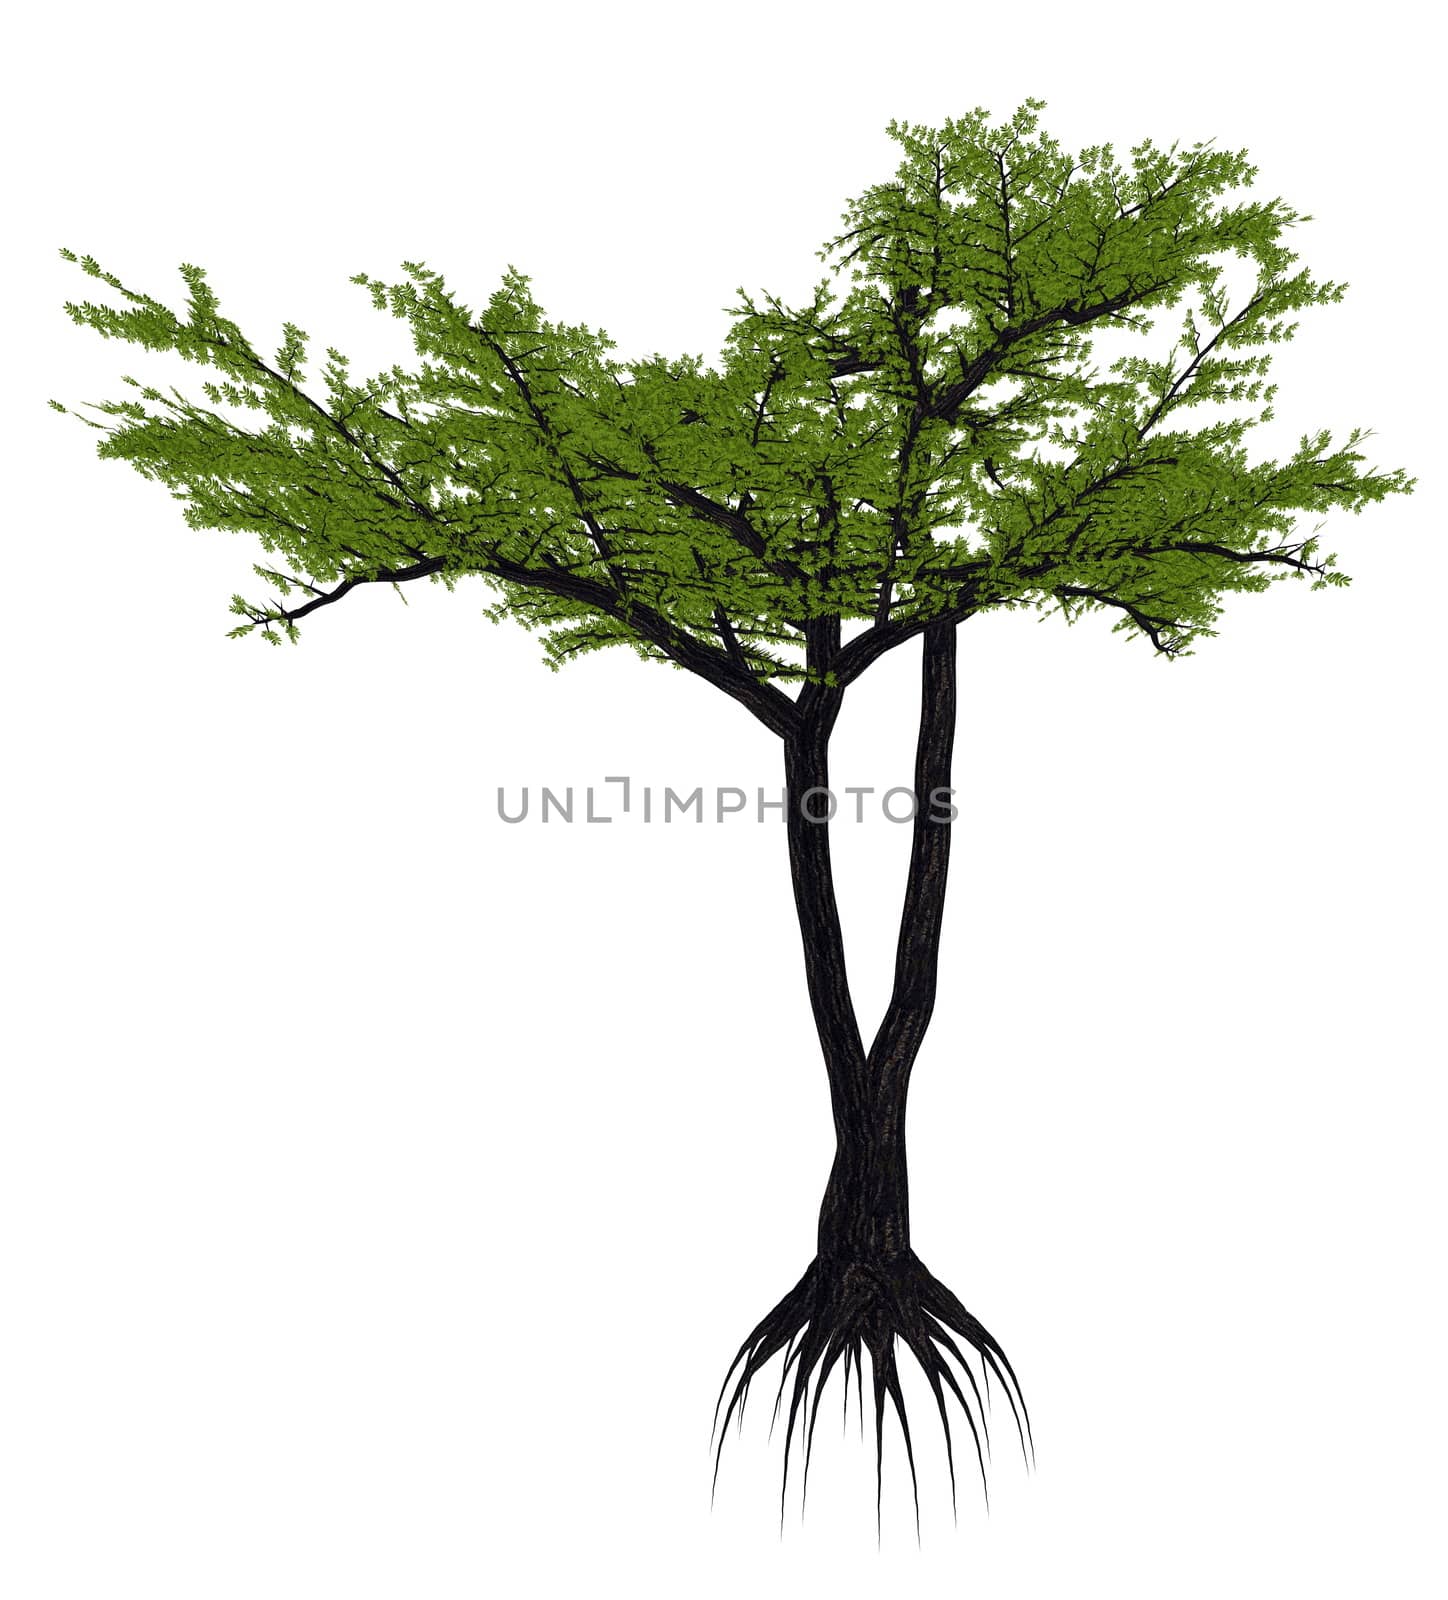 Umbrella thorn acacia tree, a. or vachellia tortilis - 3D render by Elenaphotos21